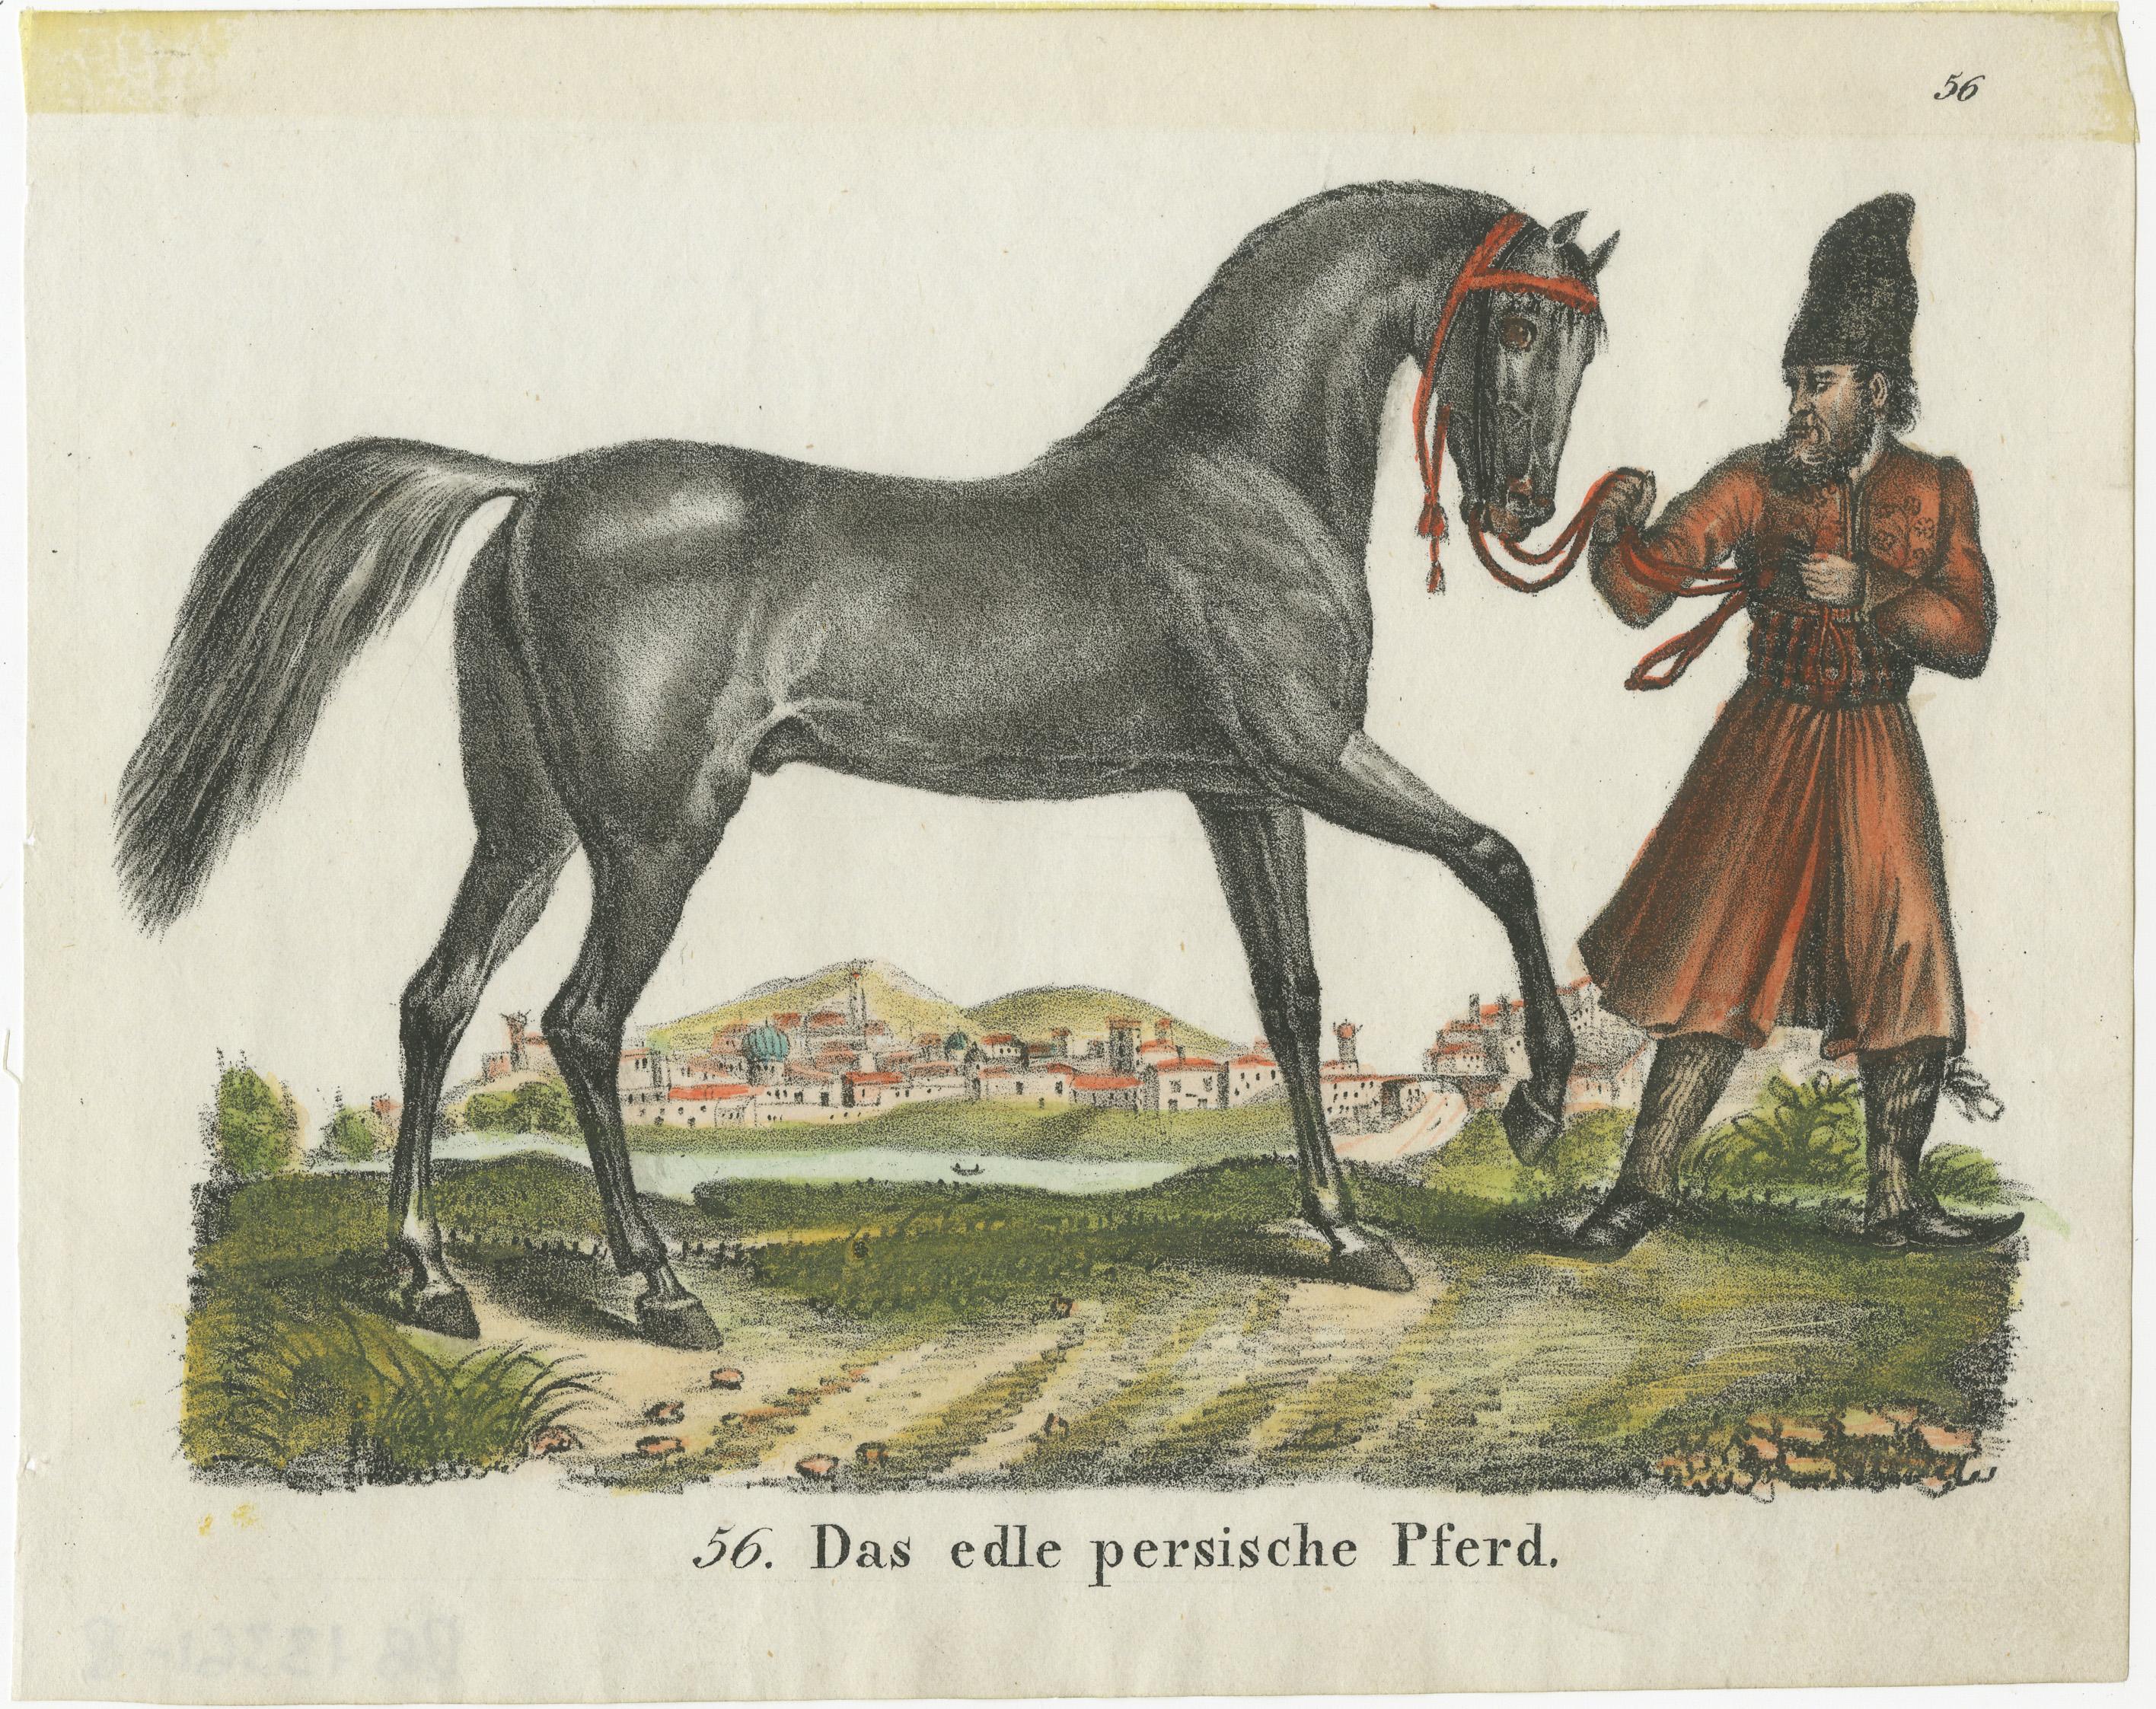 Antique print titled 'Das edle persische Pferd'. Lithograph of a Persian horse. This print originates from 'Neue Bildergallerie für die Jugend'. Published circa 1830.